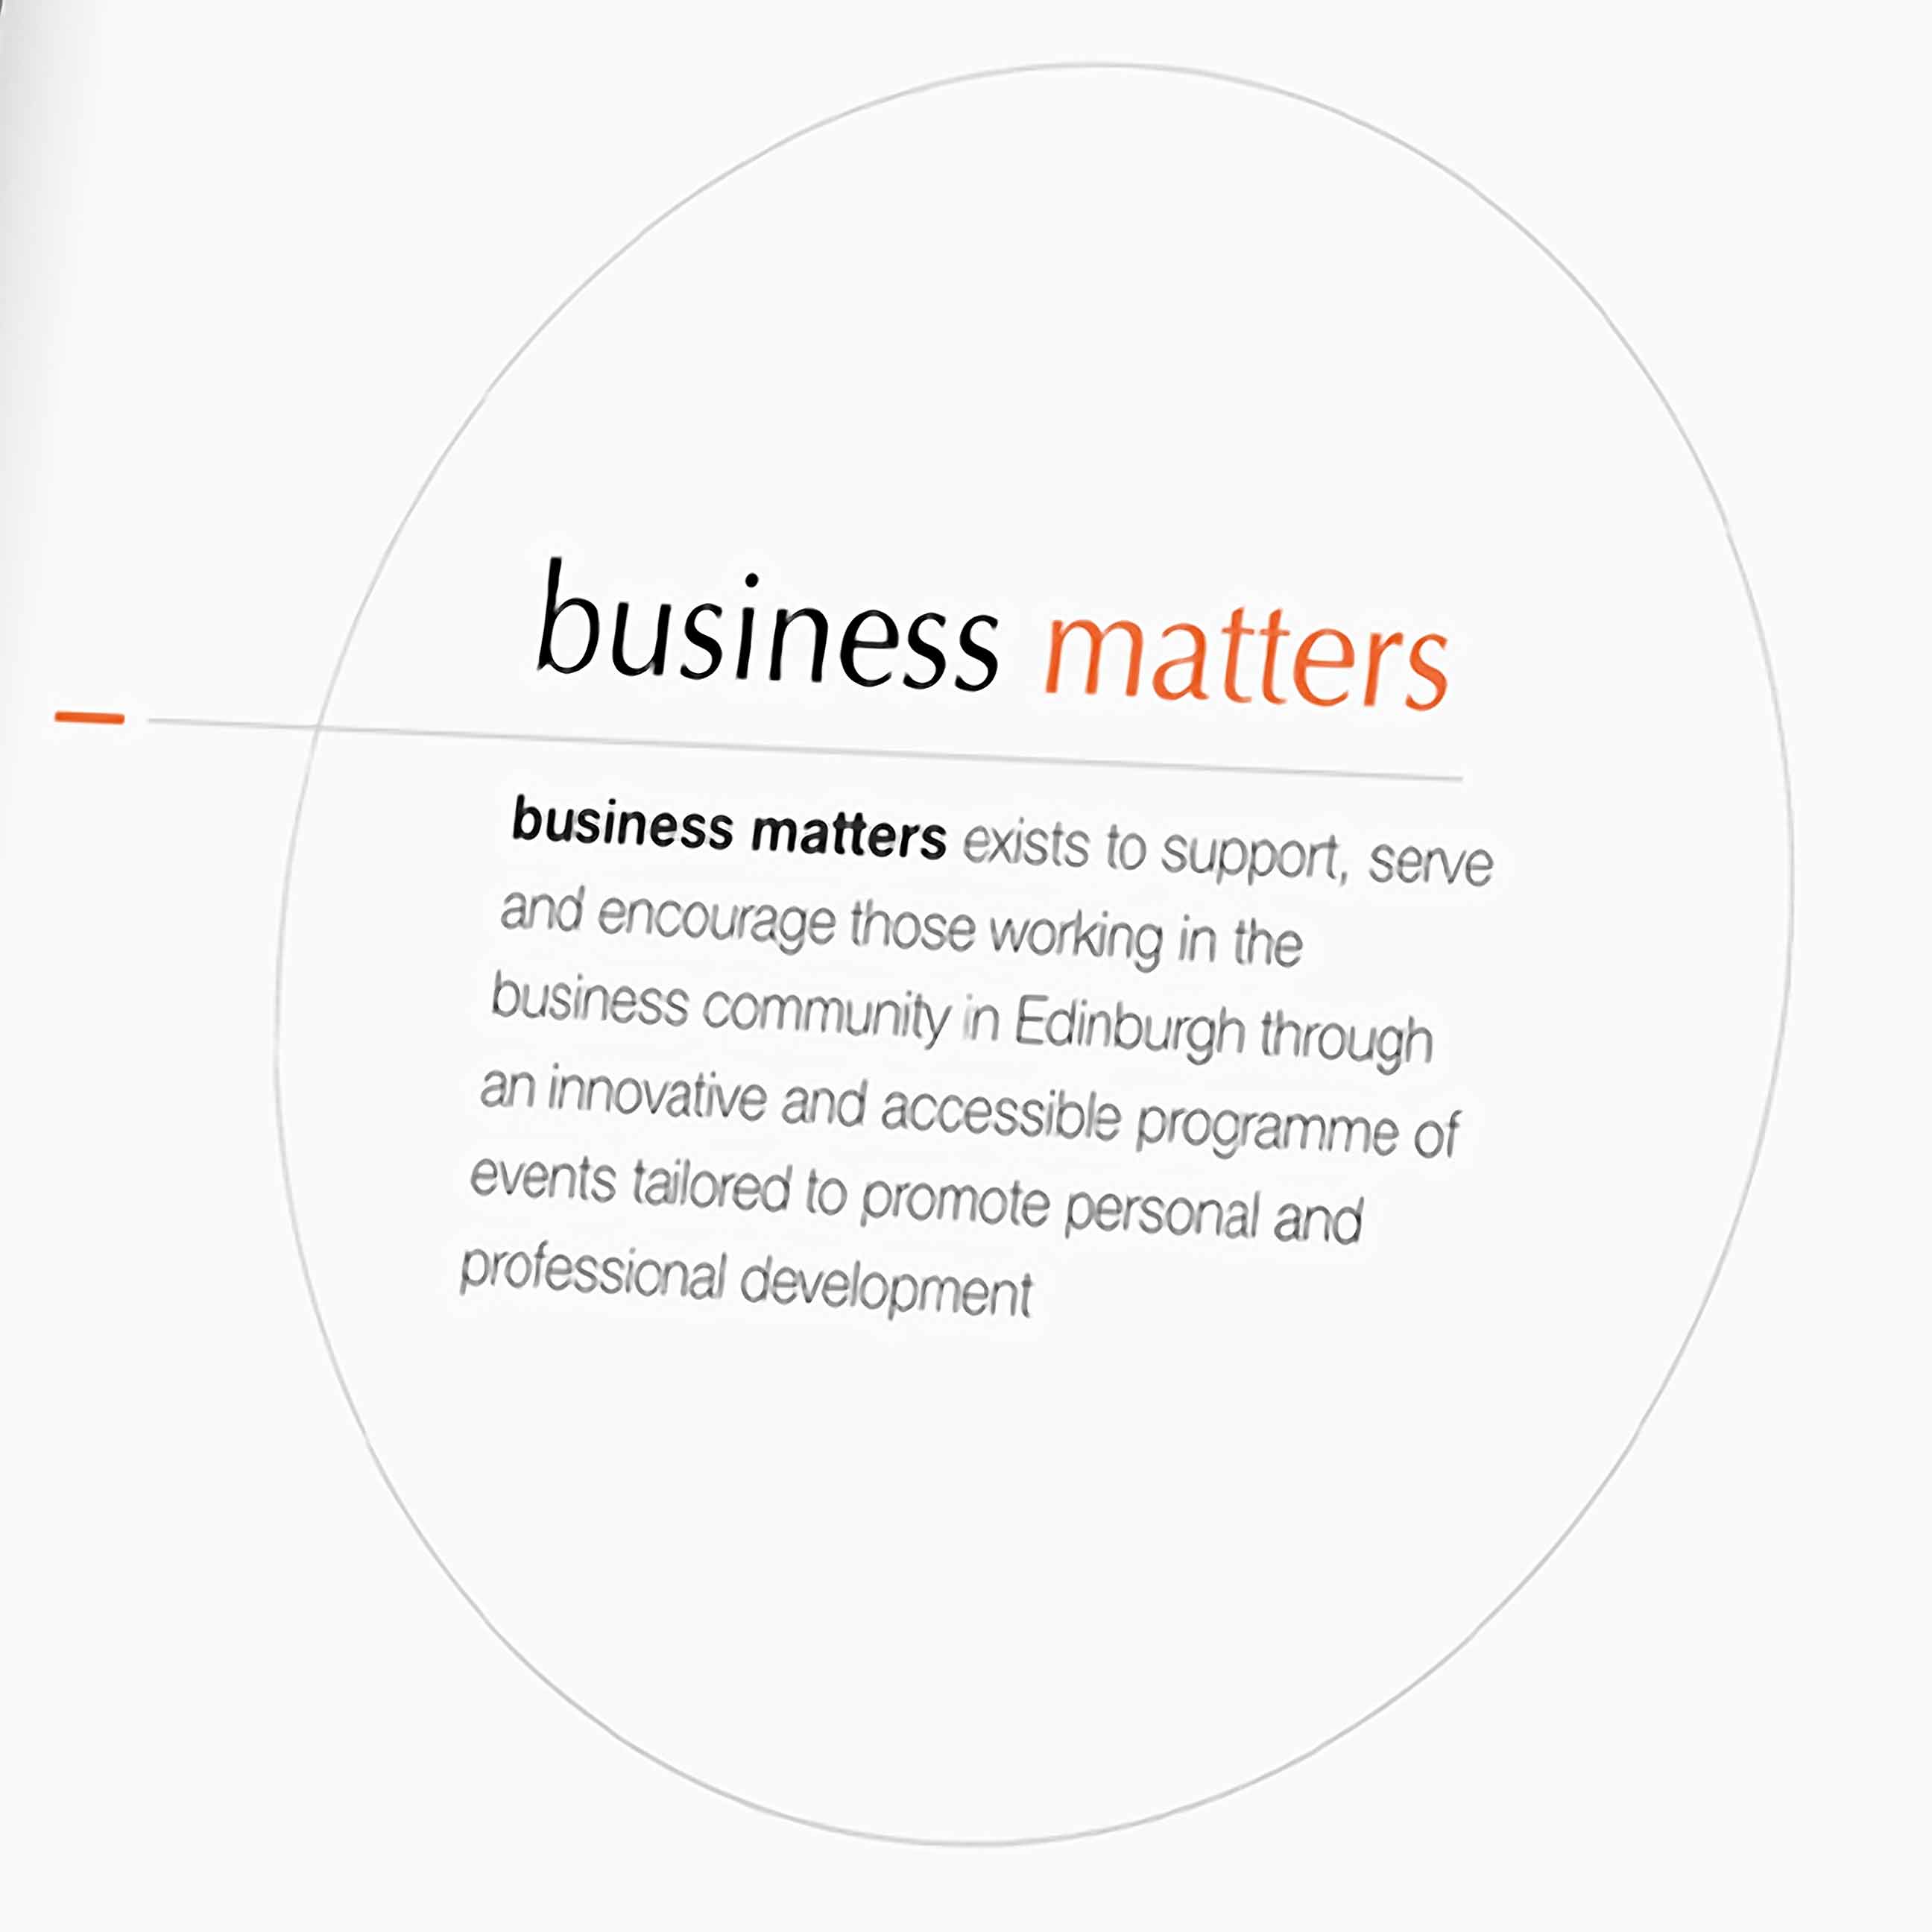 Business Matters image panel